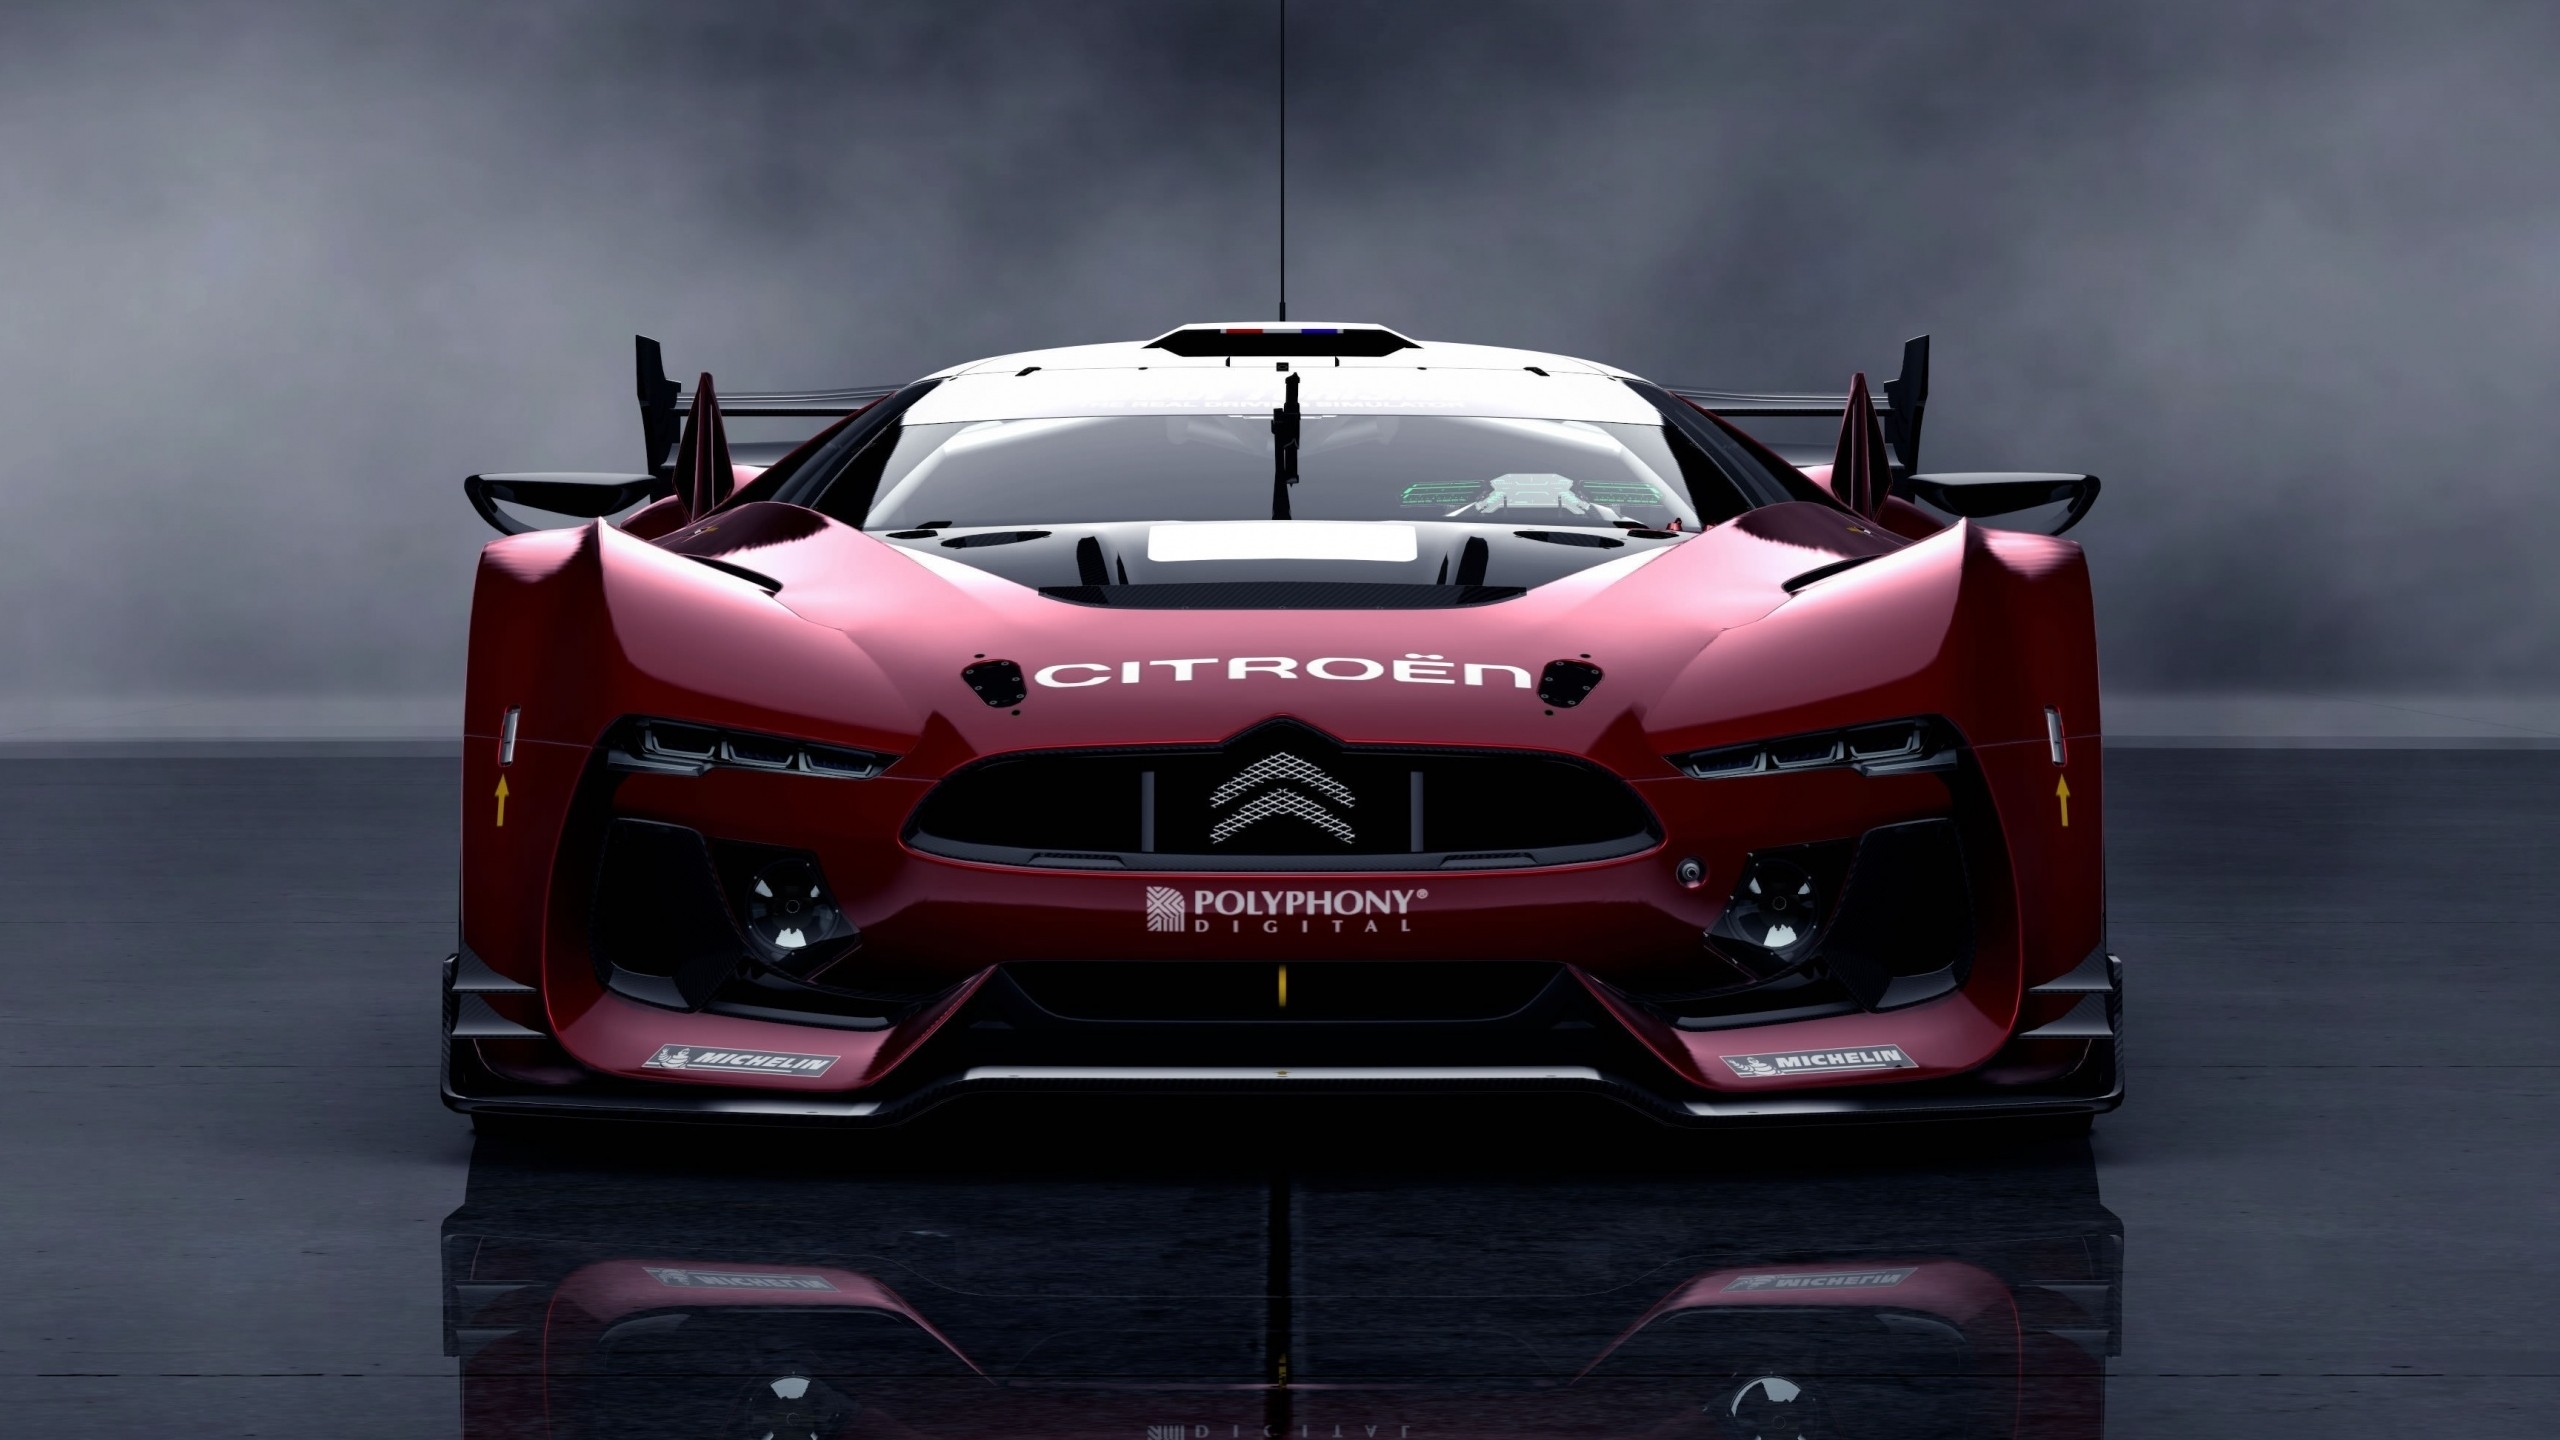 Car Gran Turismo 5 Citroen Supercars Video Games Digital Art Red Cars Race Cars Vehicle Vision Gran  2560x1440